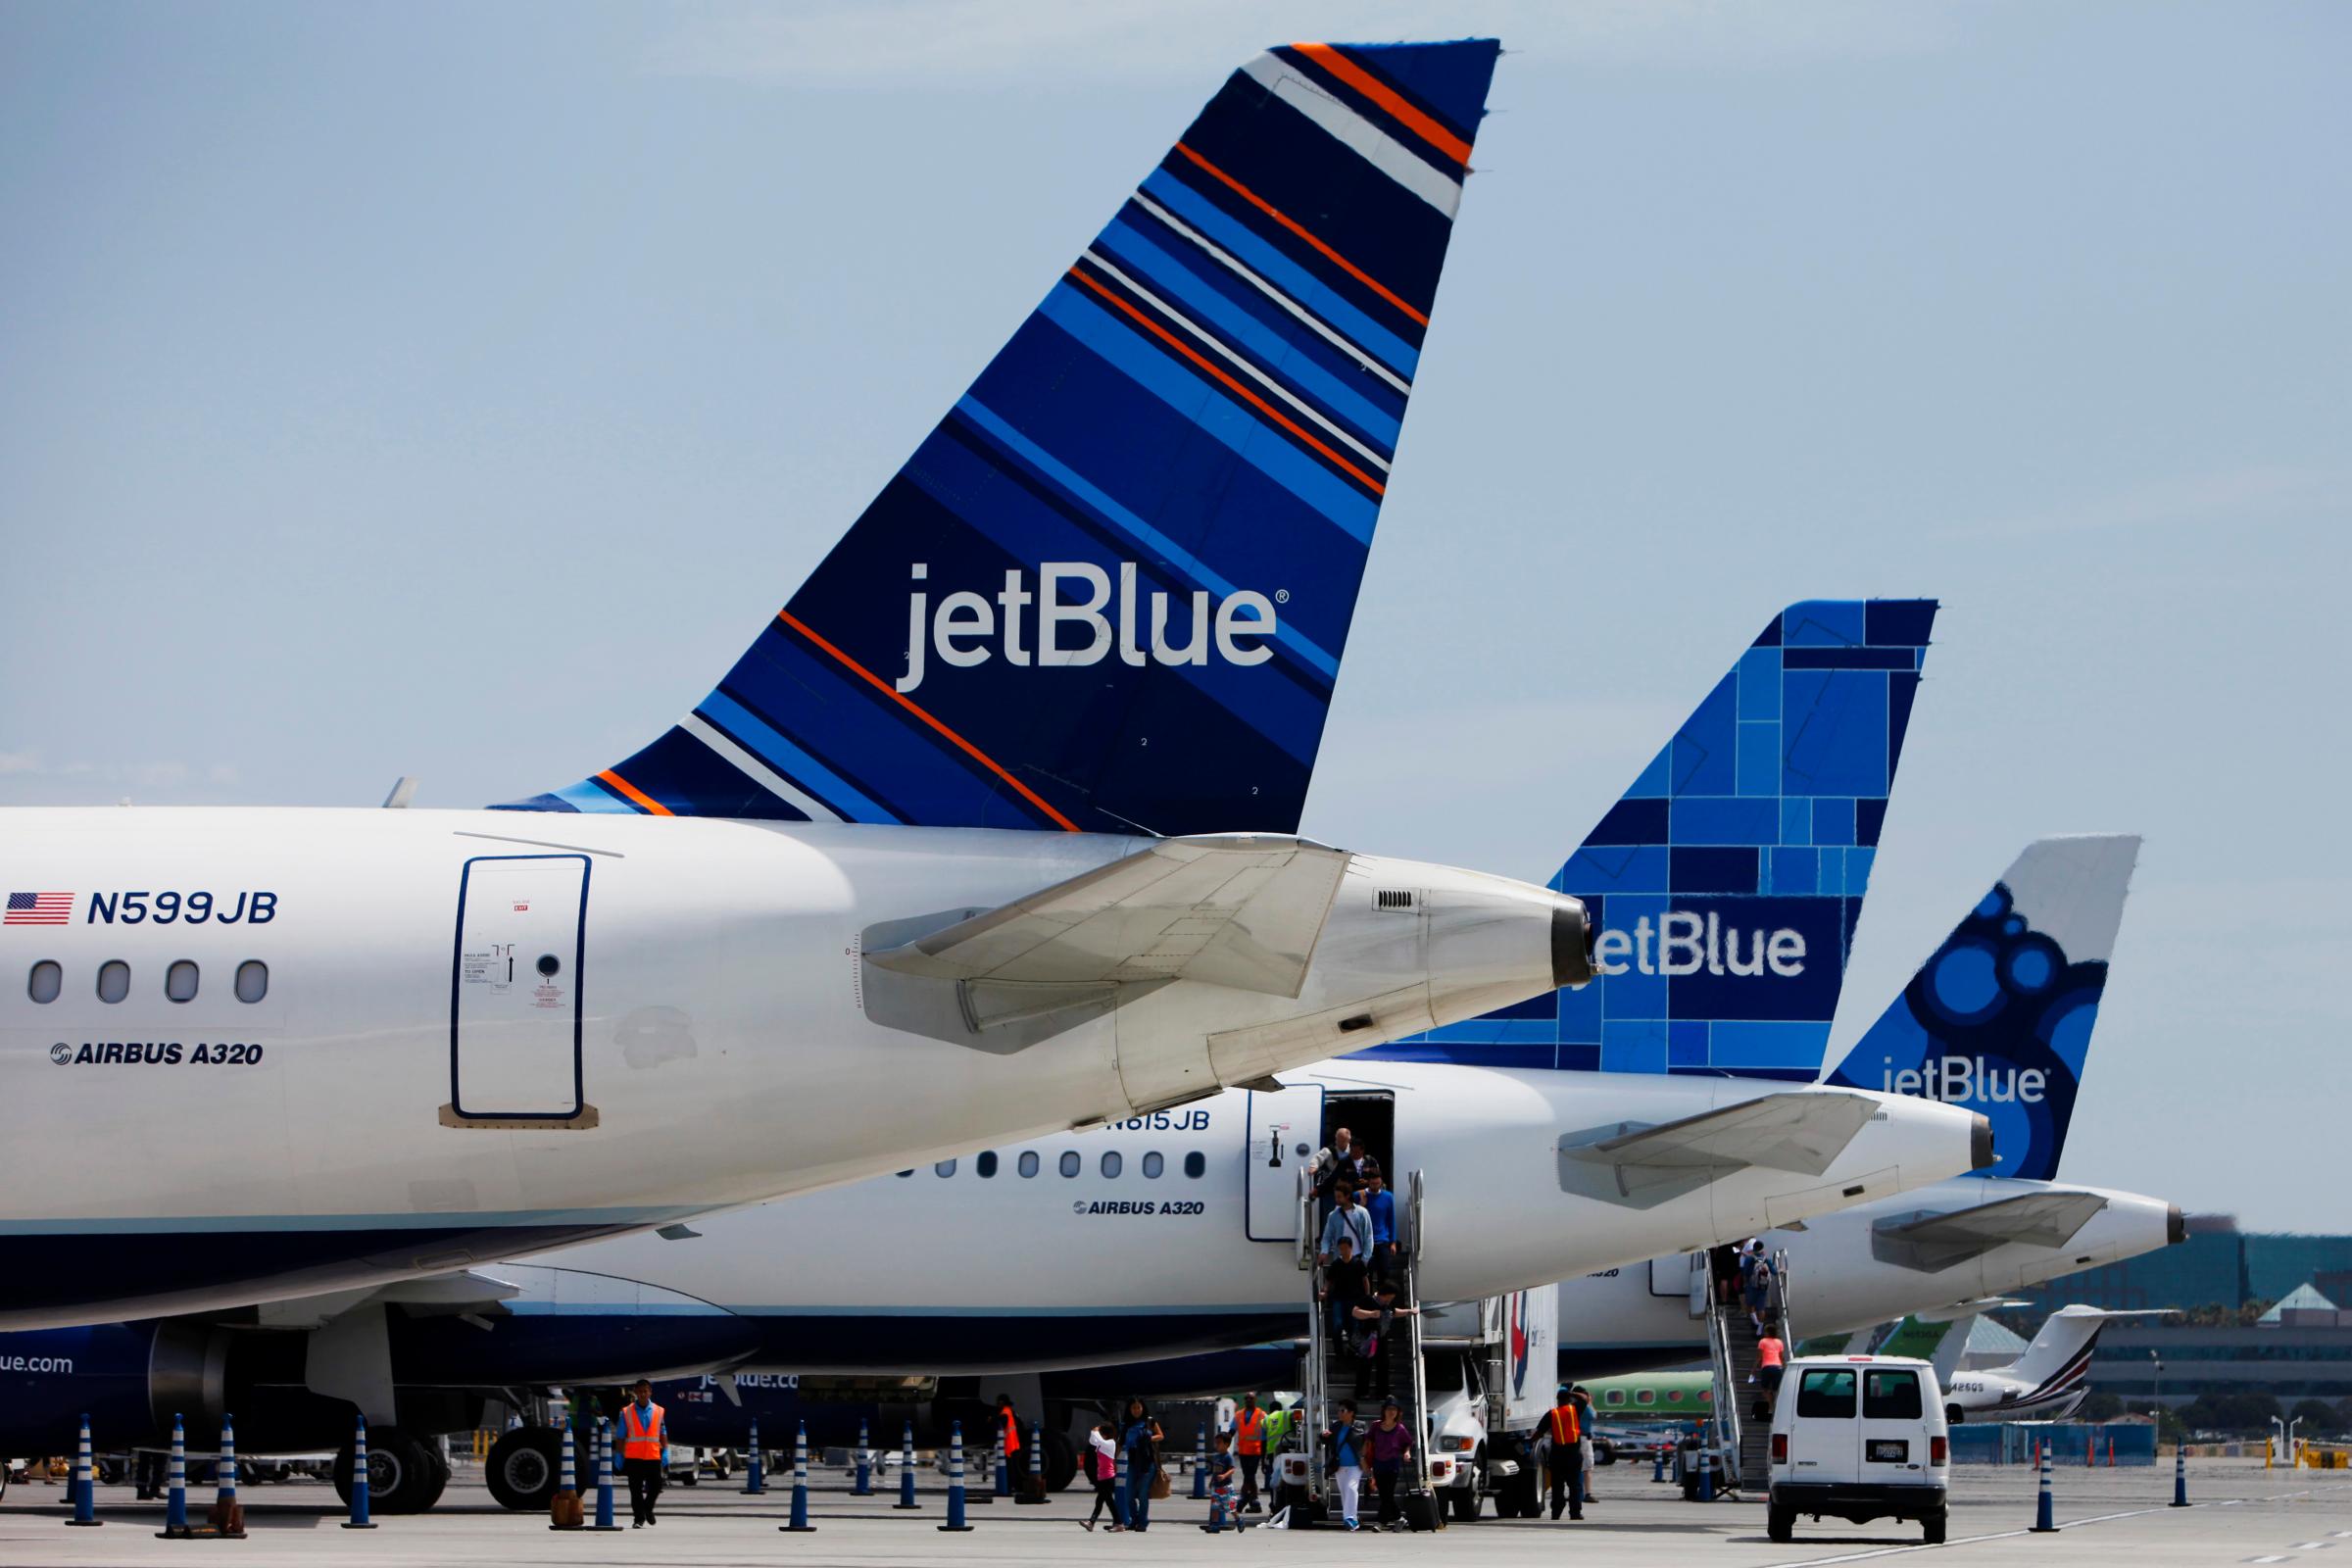 JetBlue Terminal At Long Beach Airport Ahead Of Earnings Figures